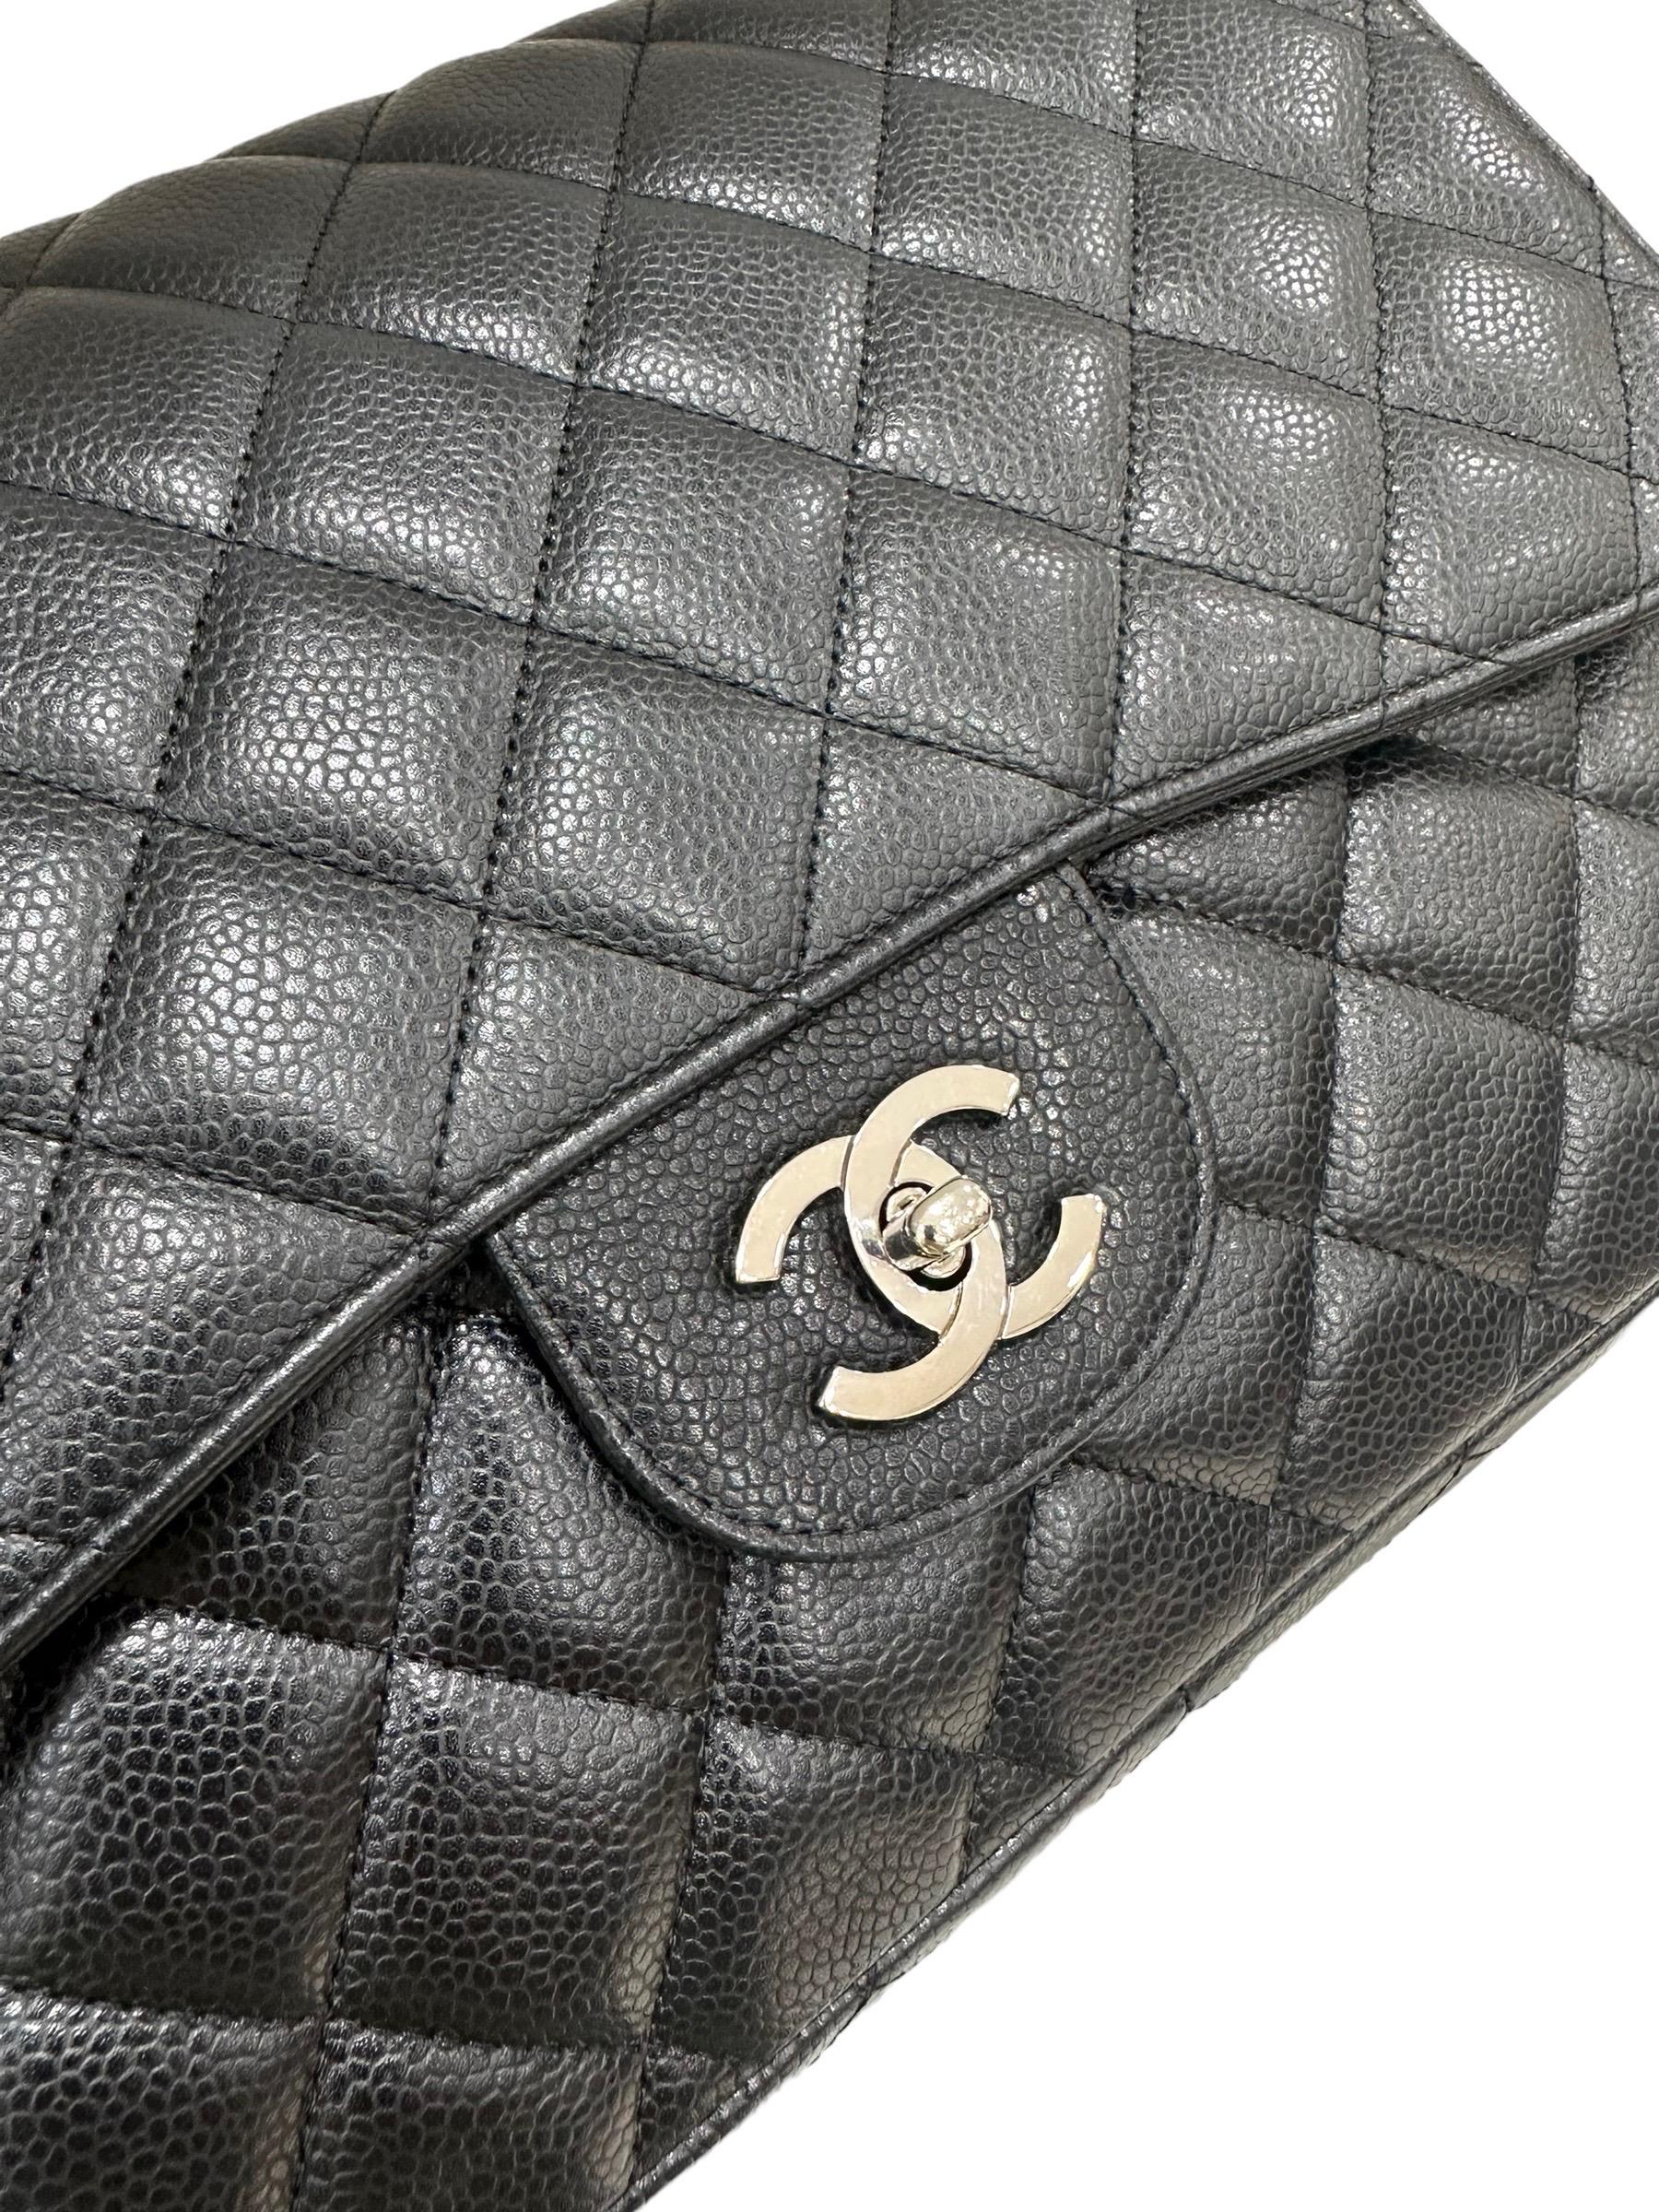 Women's 2009 Chanel Jumbo Black Caviar Leather Top Shoulder Bag  For Sale